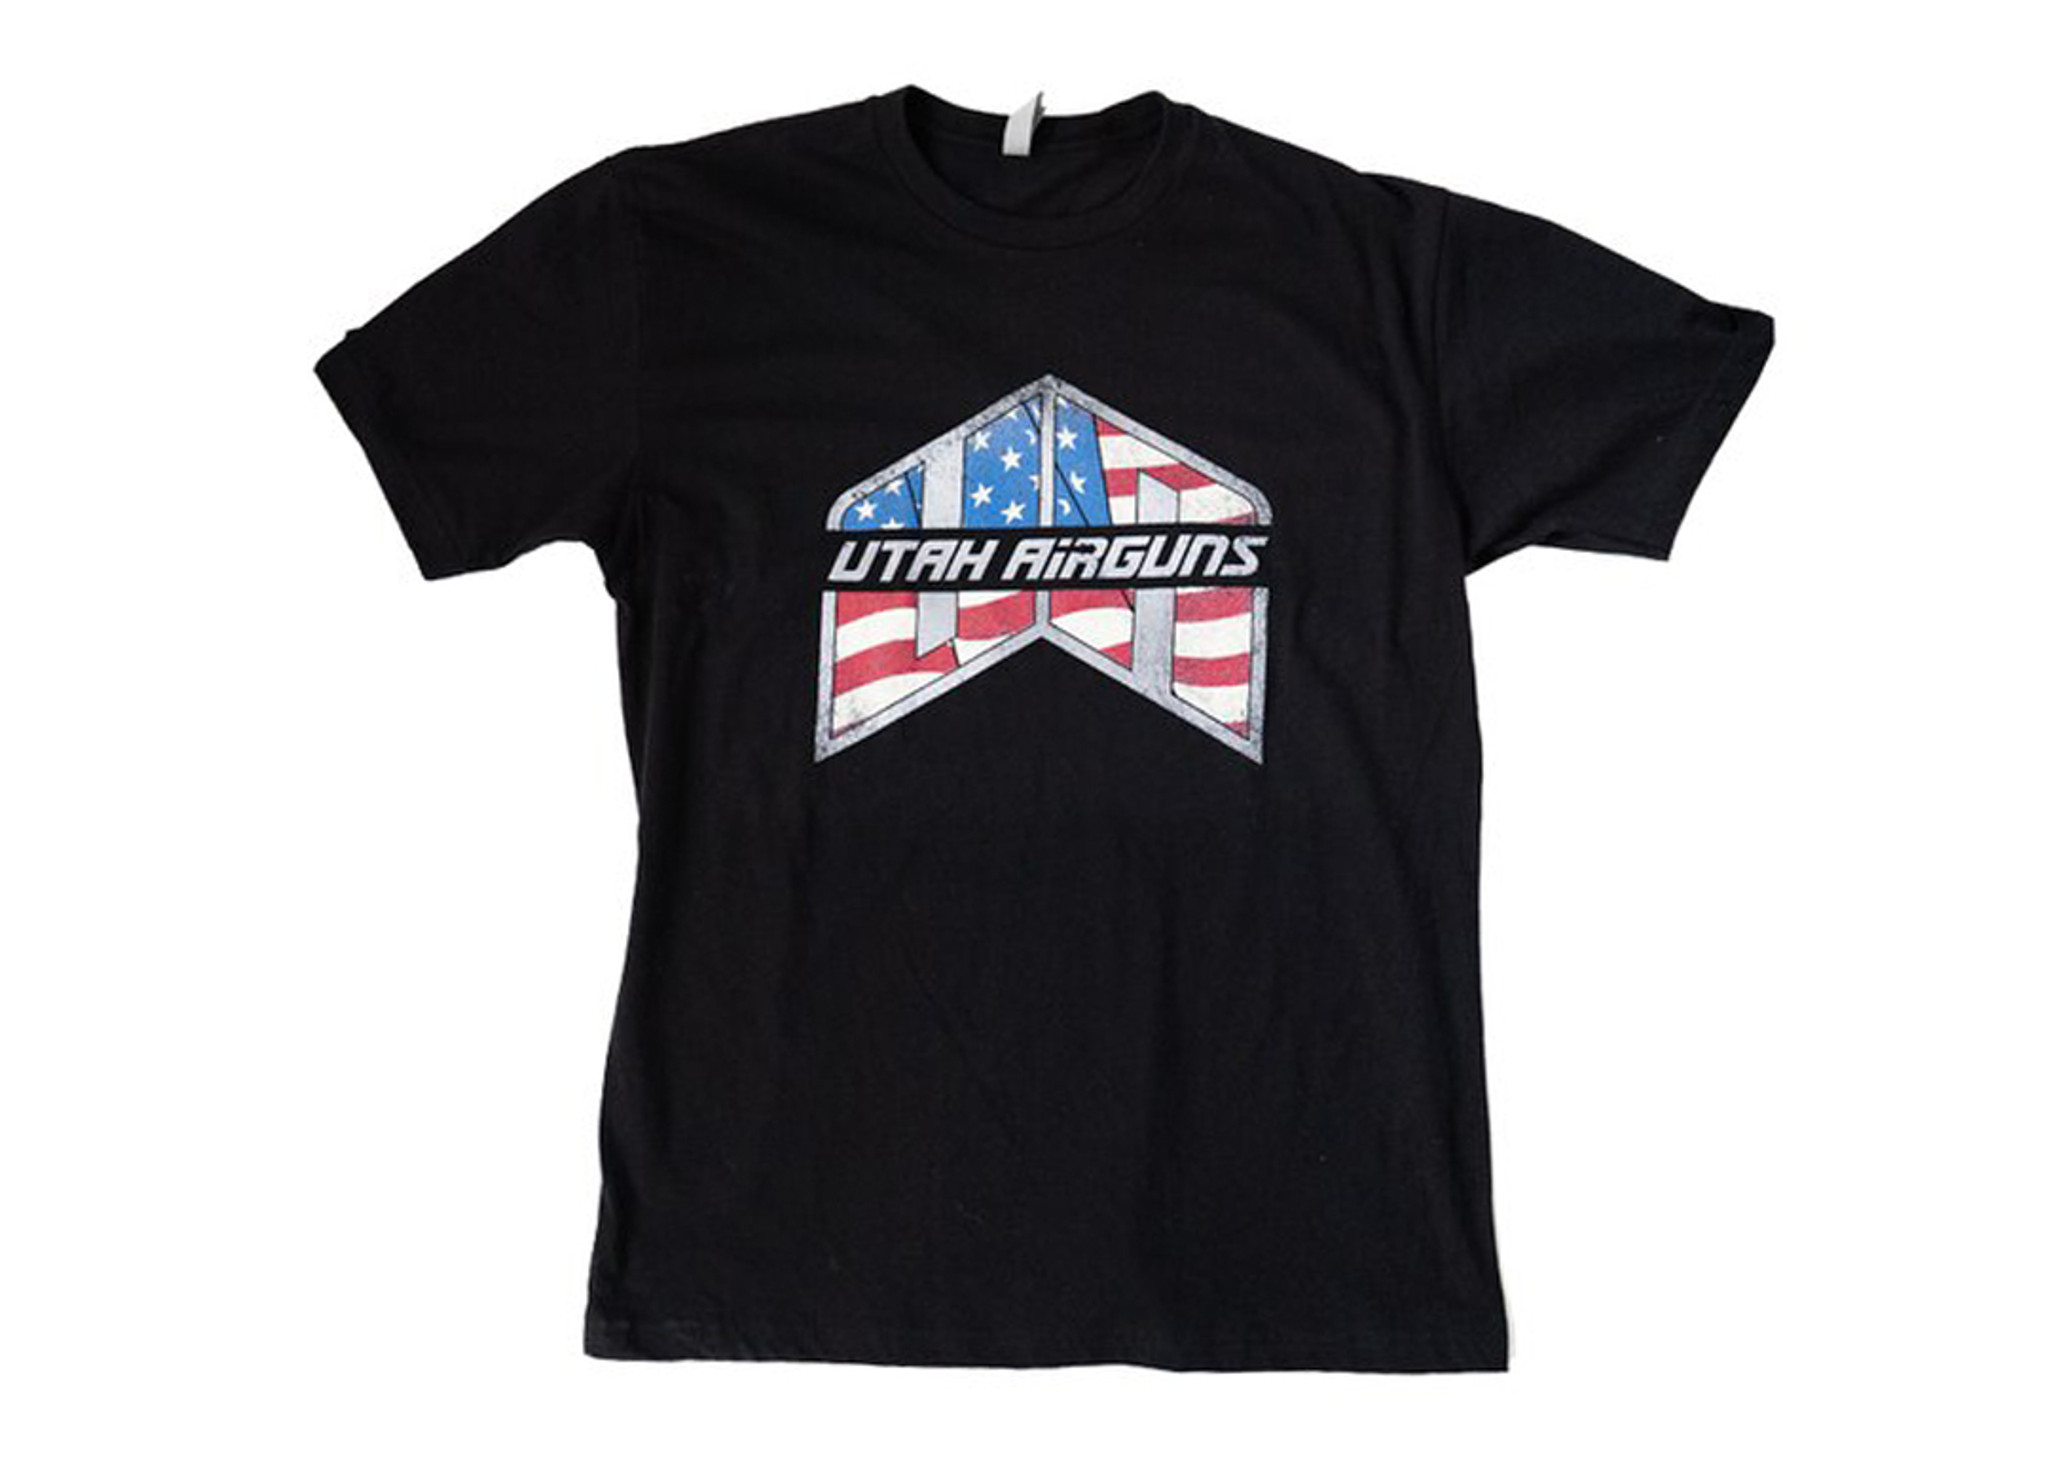 UA T-Shirt (Black w/ Flag Logo)